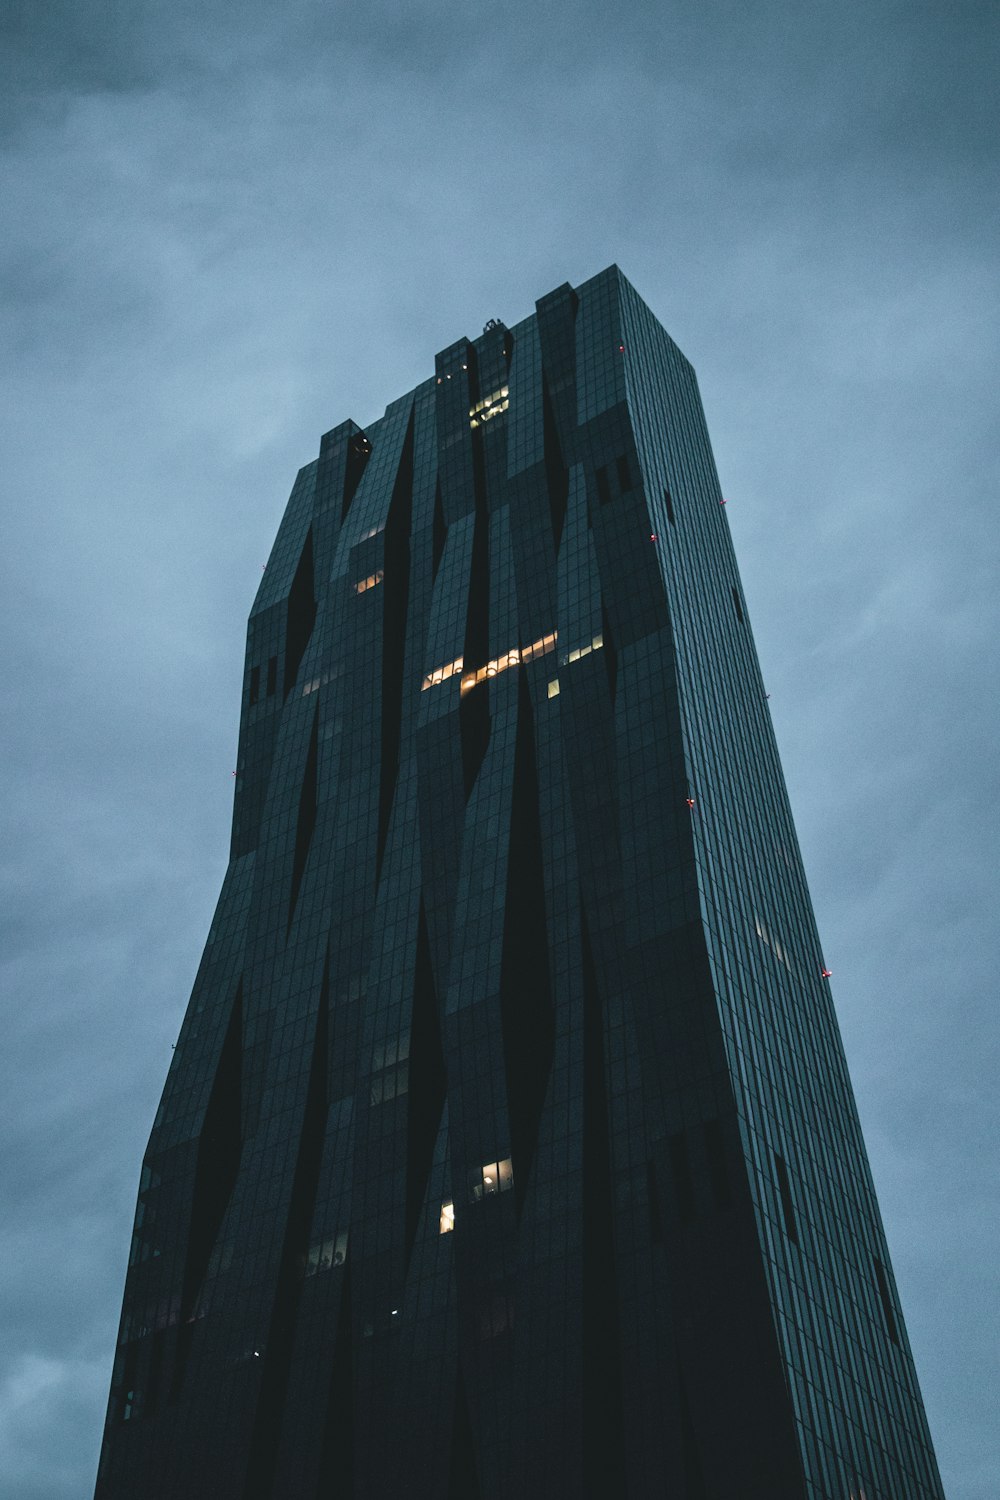 black high rise building under gray sky